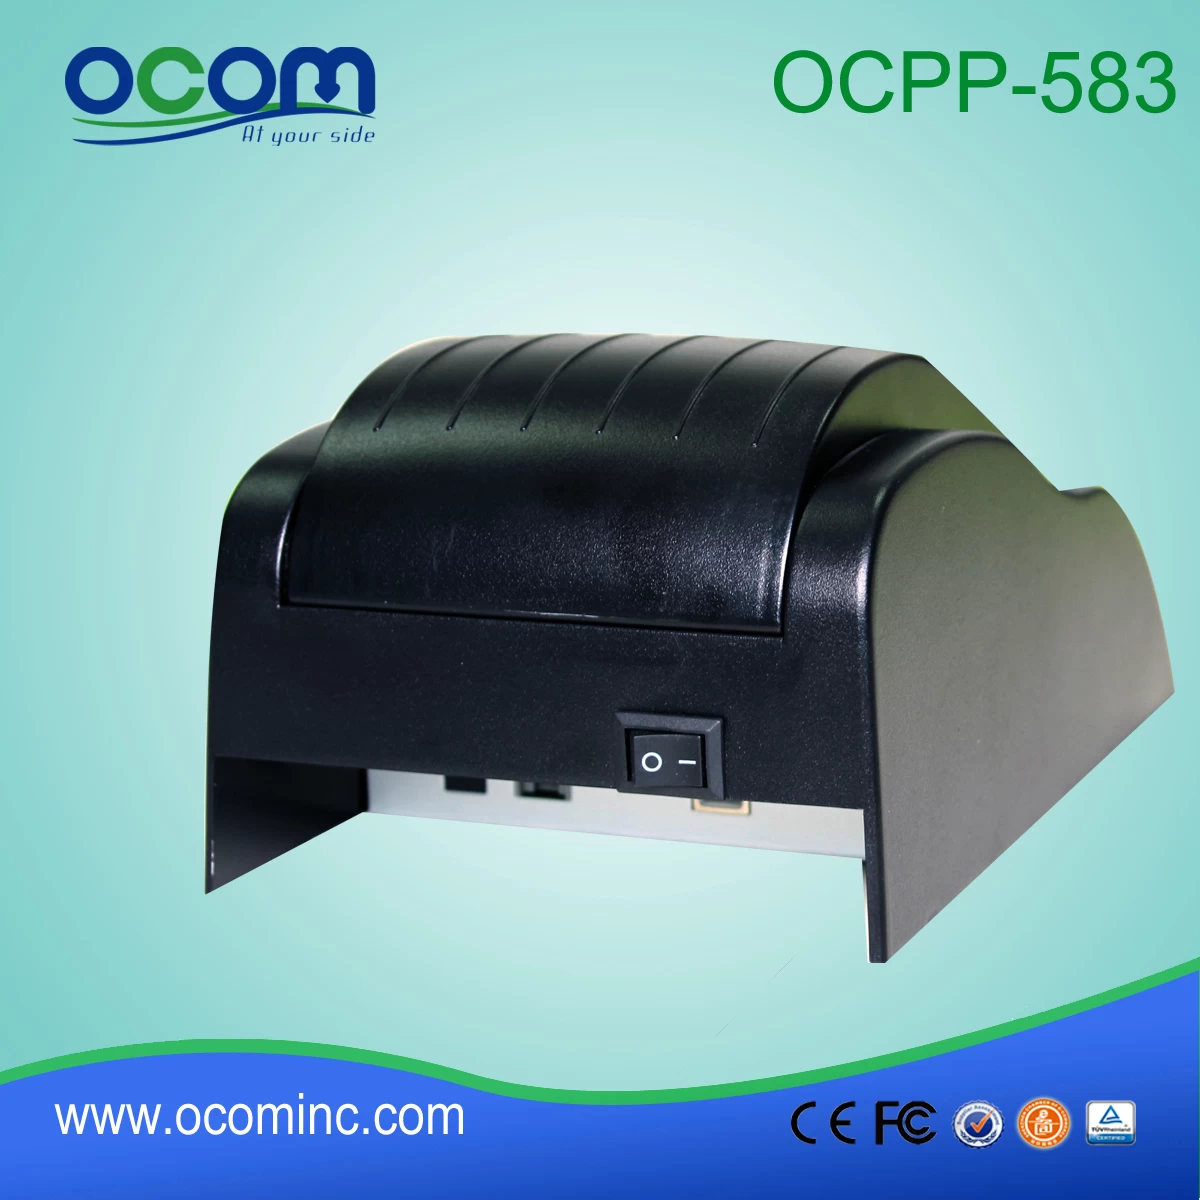 OCPP-583:2015 reliable supply 58mm thermal receipt printer, pos printer